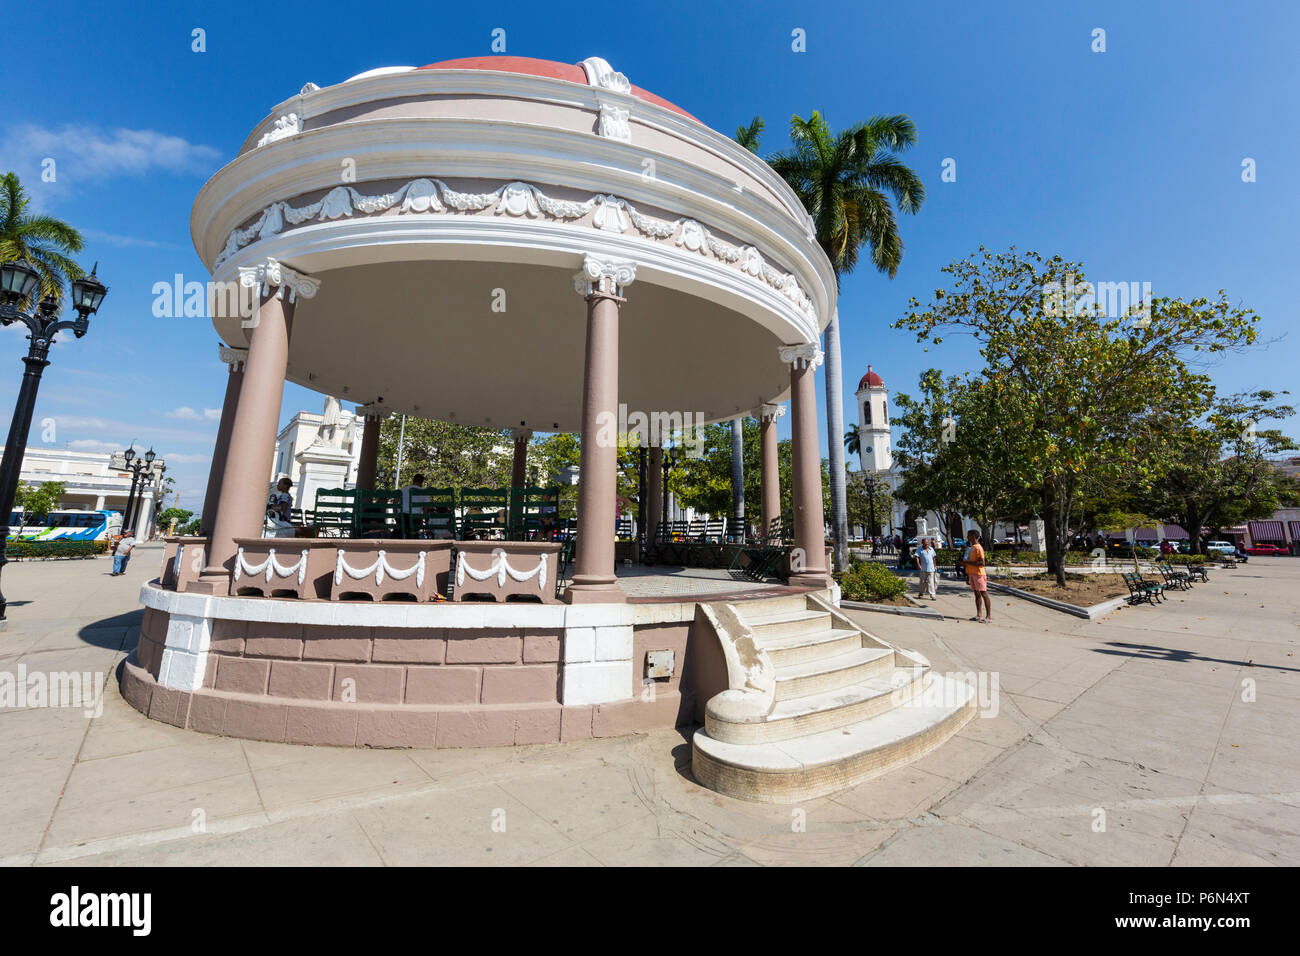 Domed band stand in Parque JoseÌ MartiÌ, Cienfuegos, Cuba Stock Photo